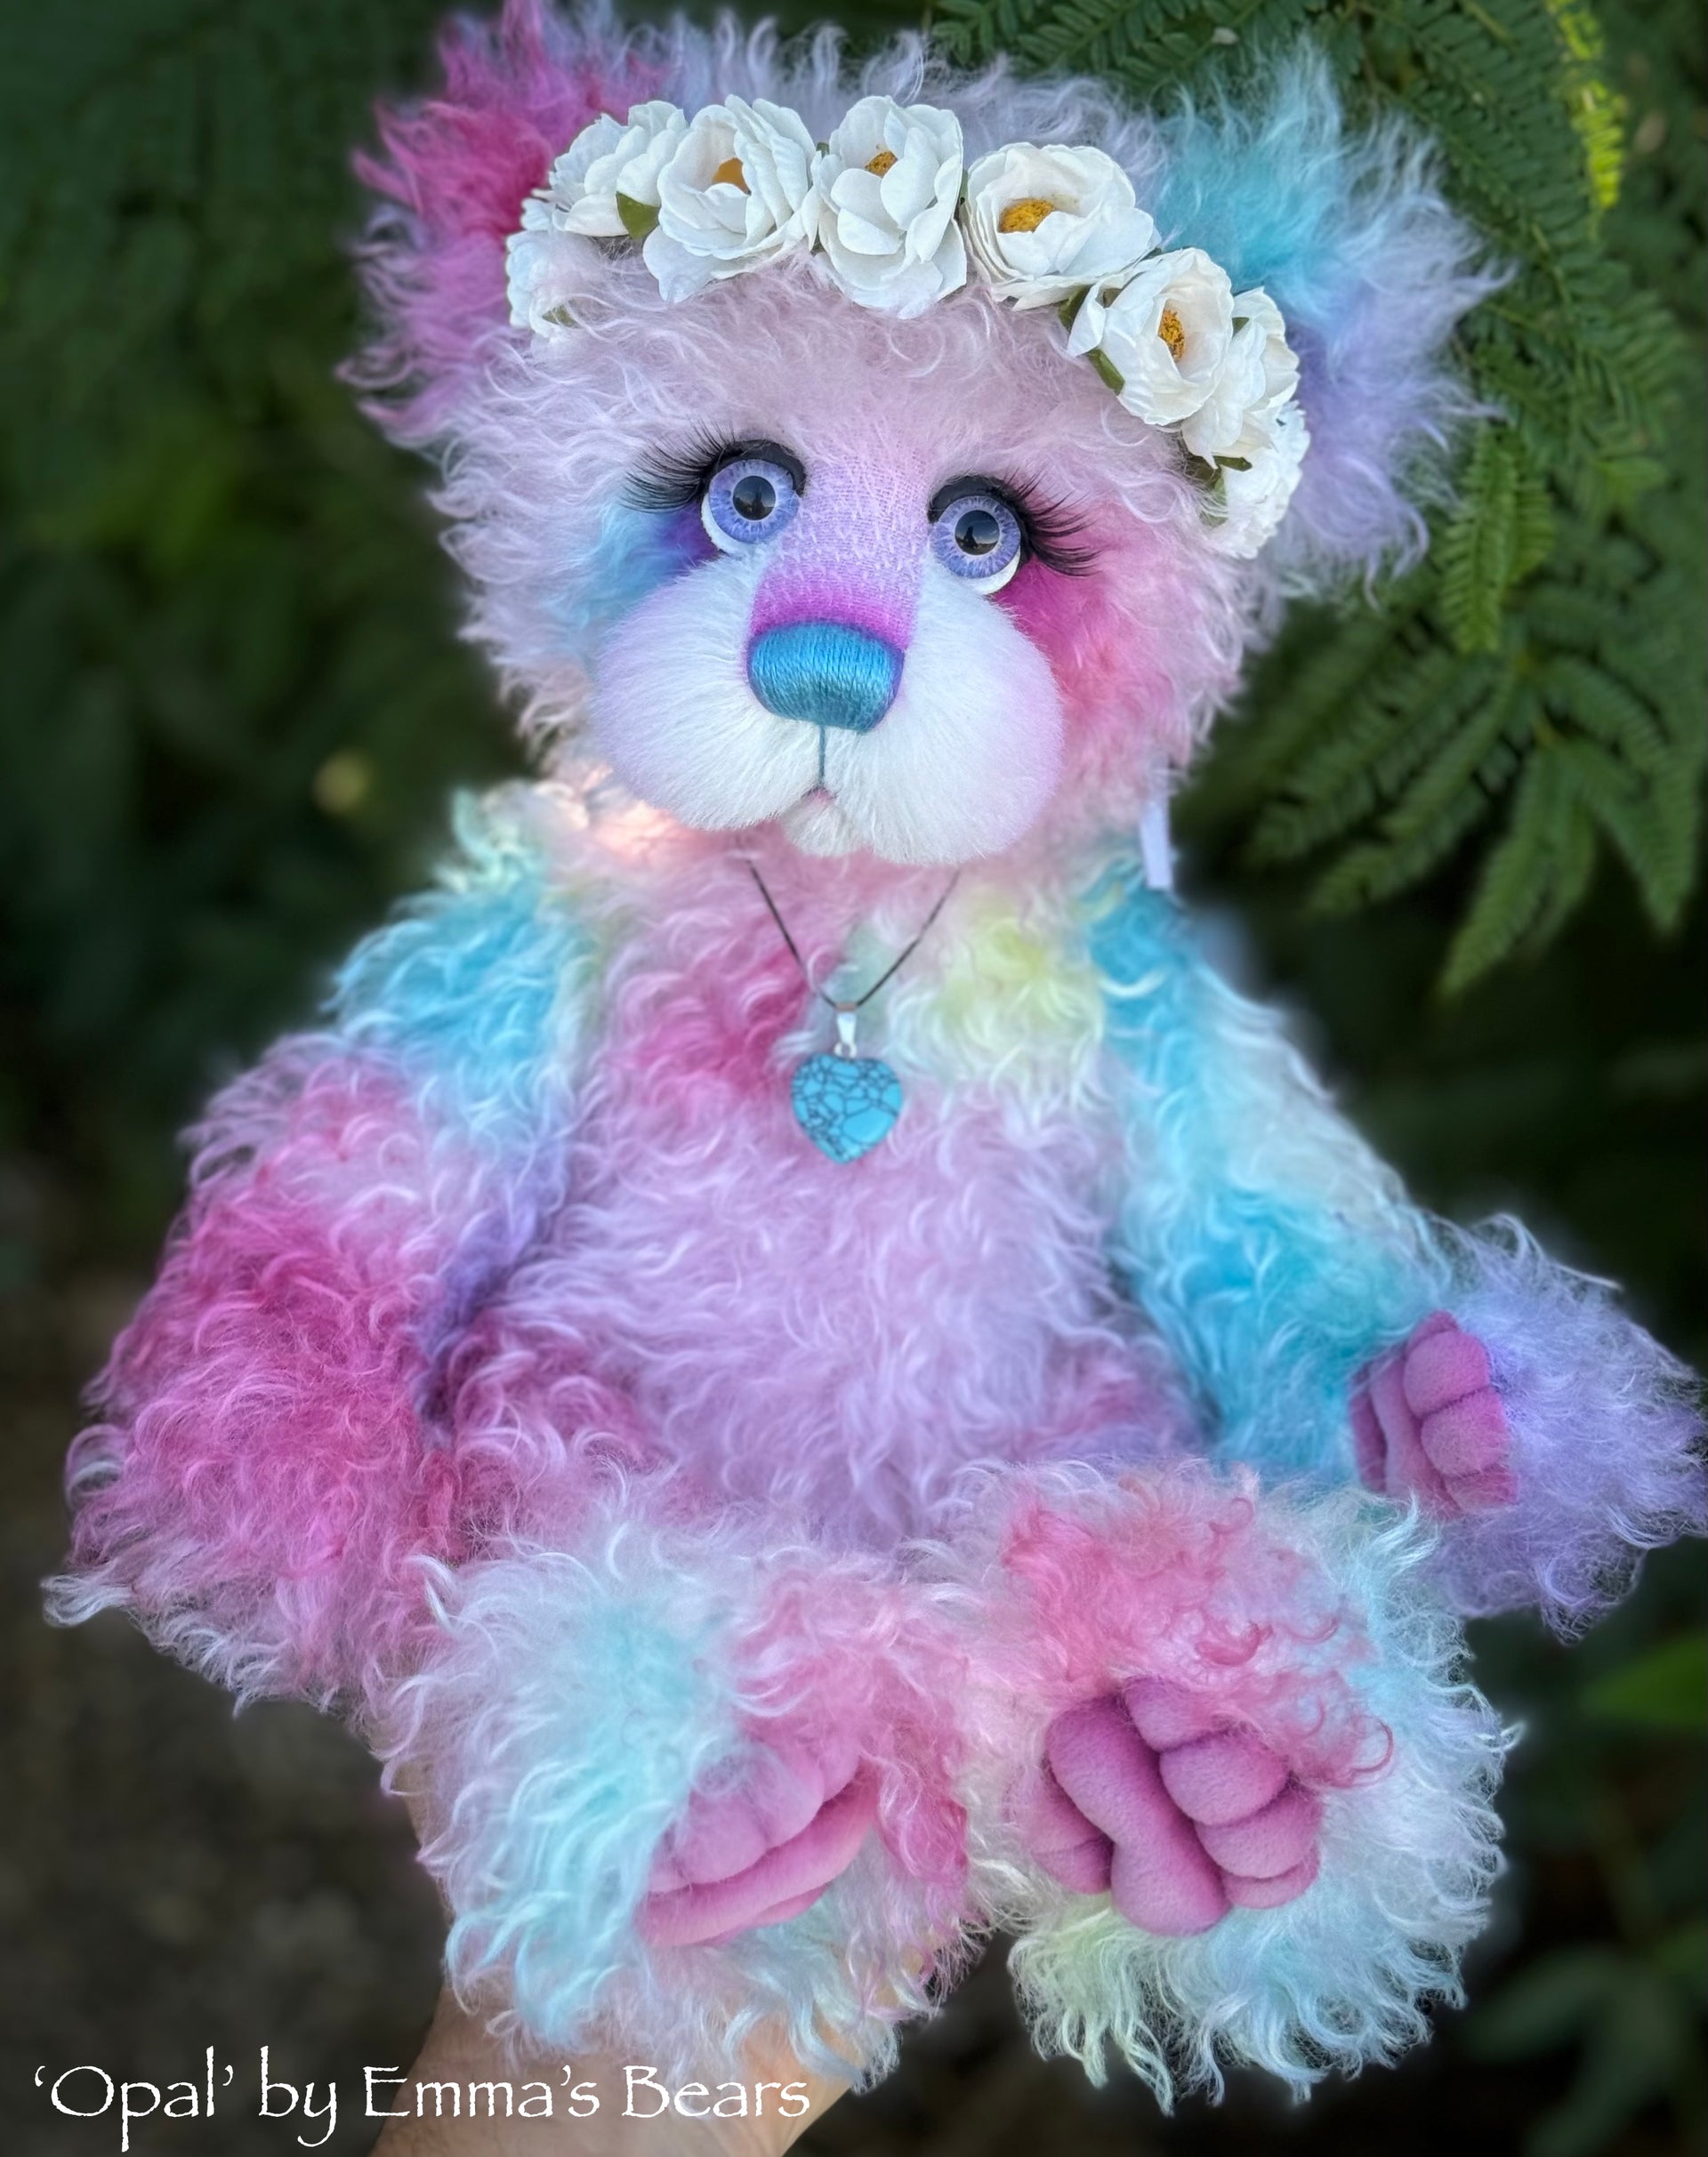 Opal - 16" Hand-dyed Curlylocks Mohair Artist Bear by Emma's Bears - OOAK